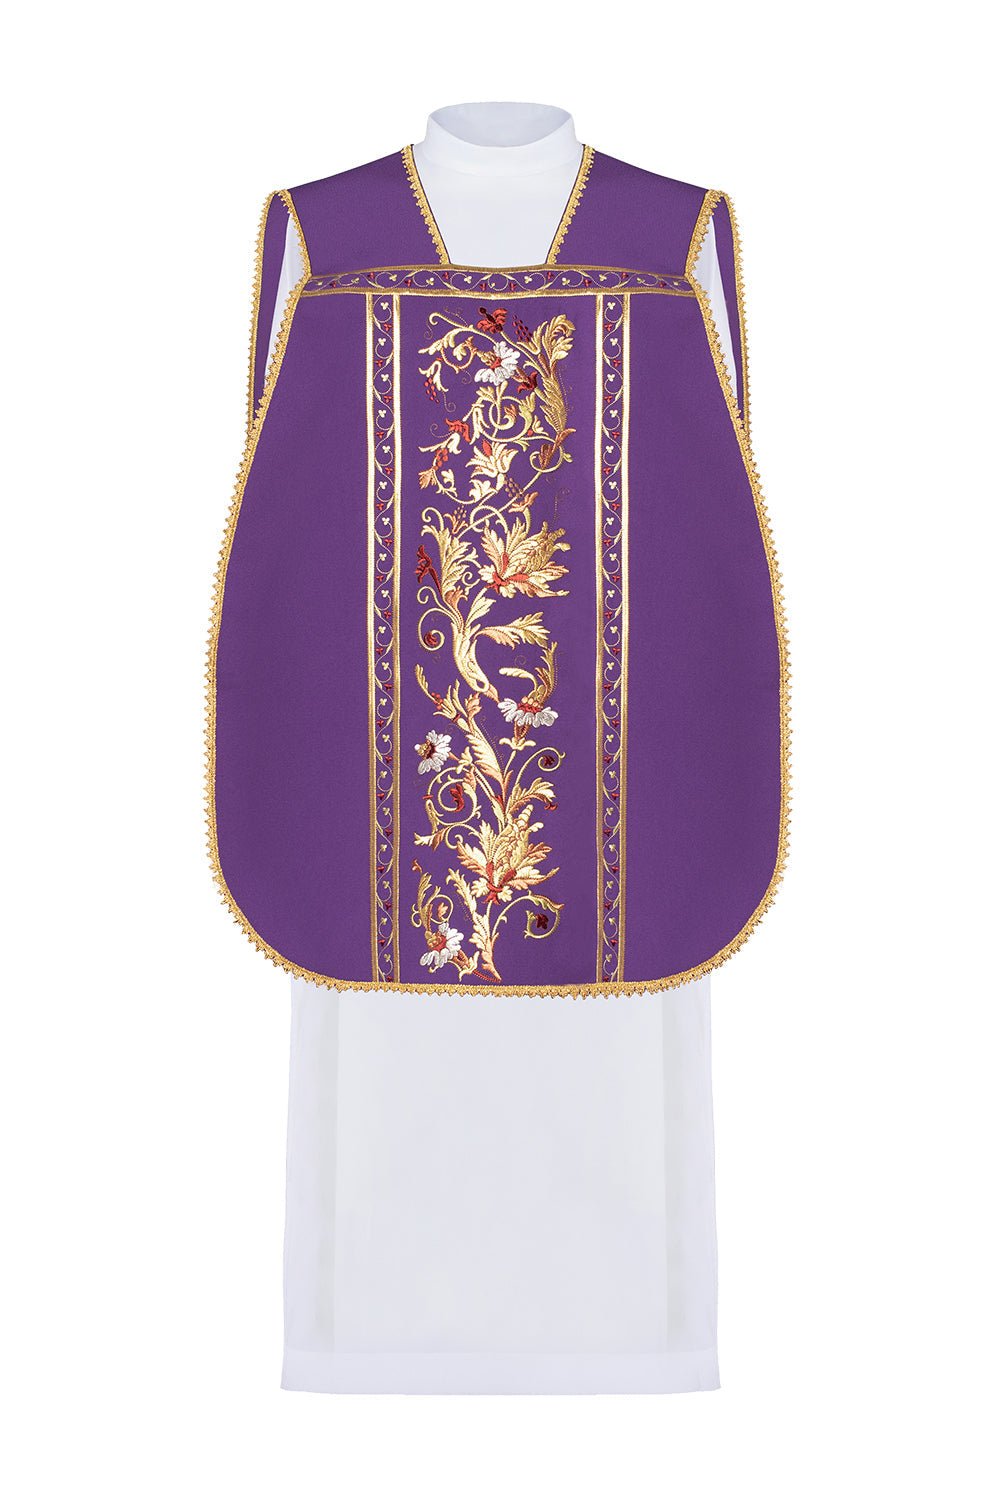 Fioletowy ornat rzymski haftowany z motywem Serca Jezusa Chrystusa